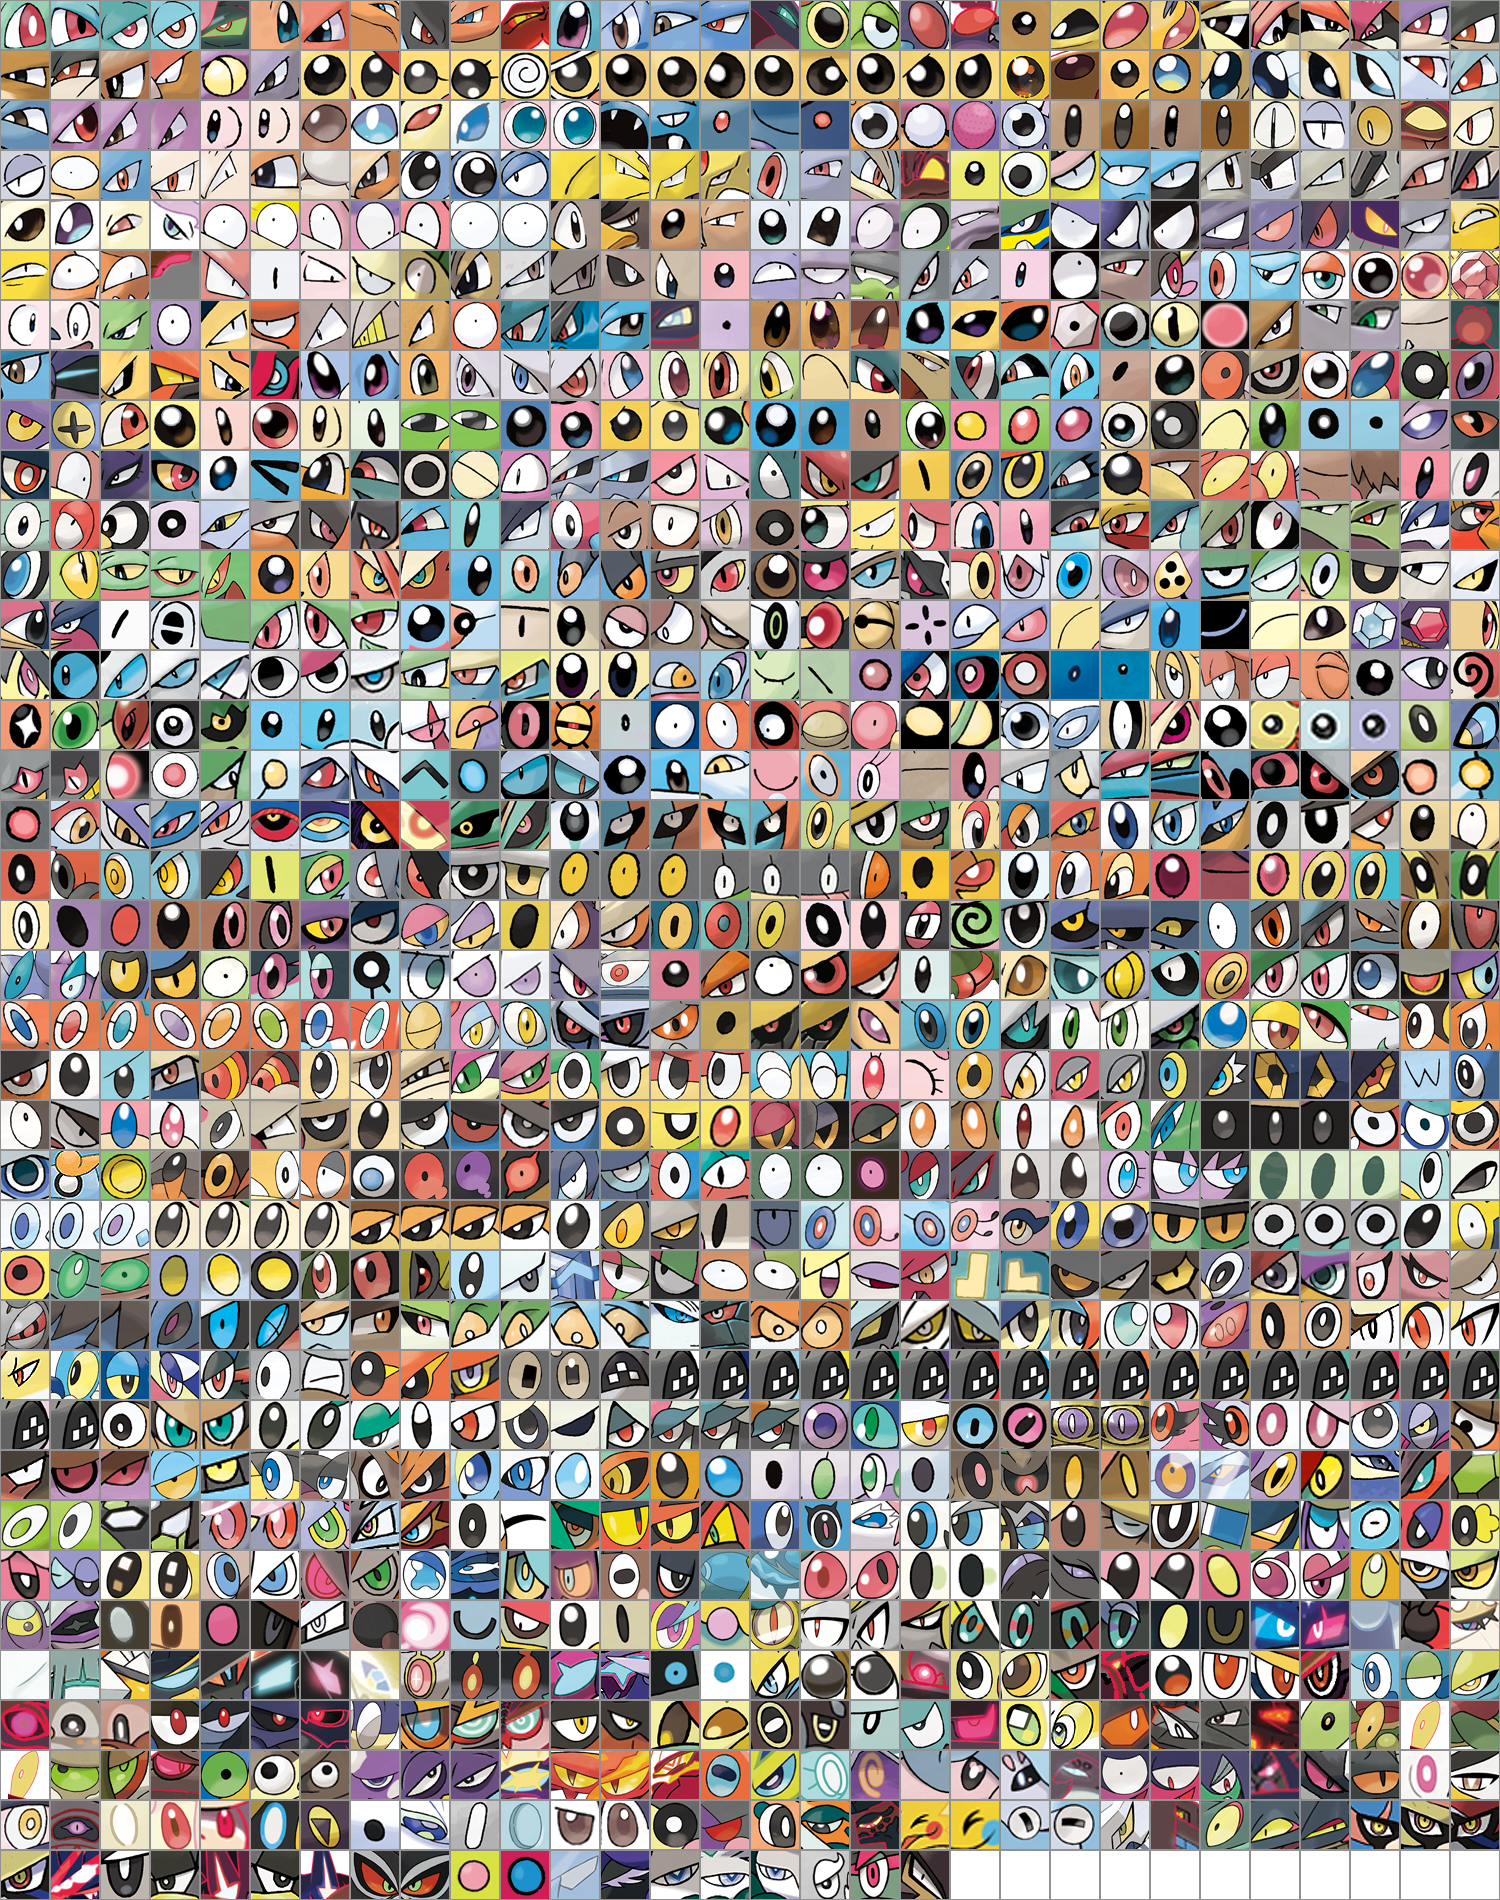 National Pokédex 001 - 053 : Drawing Every Mega X/Y Pokémon